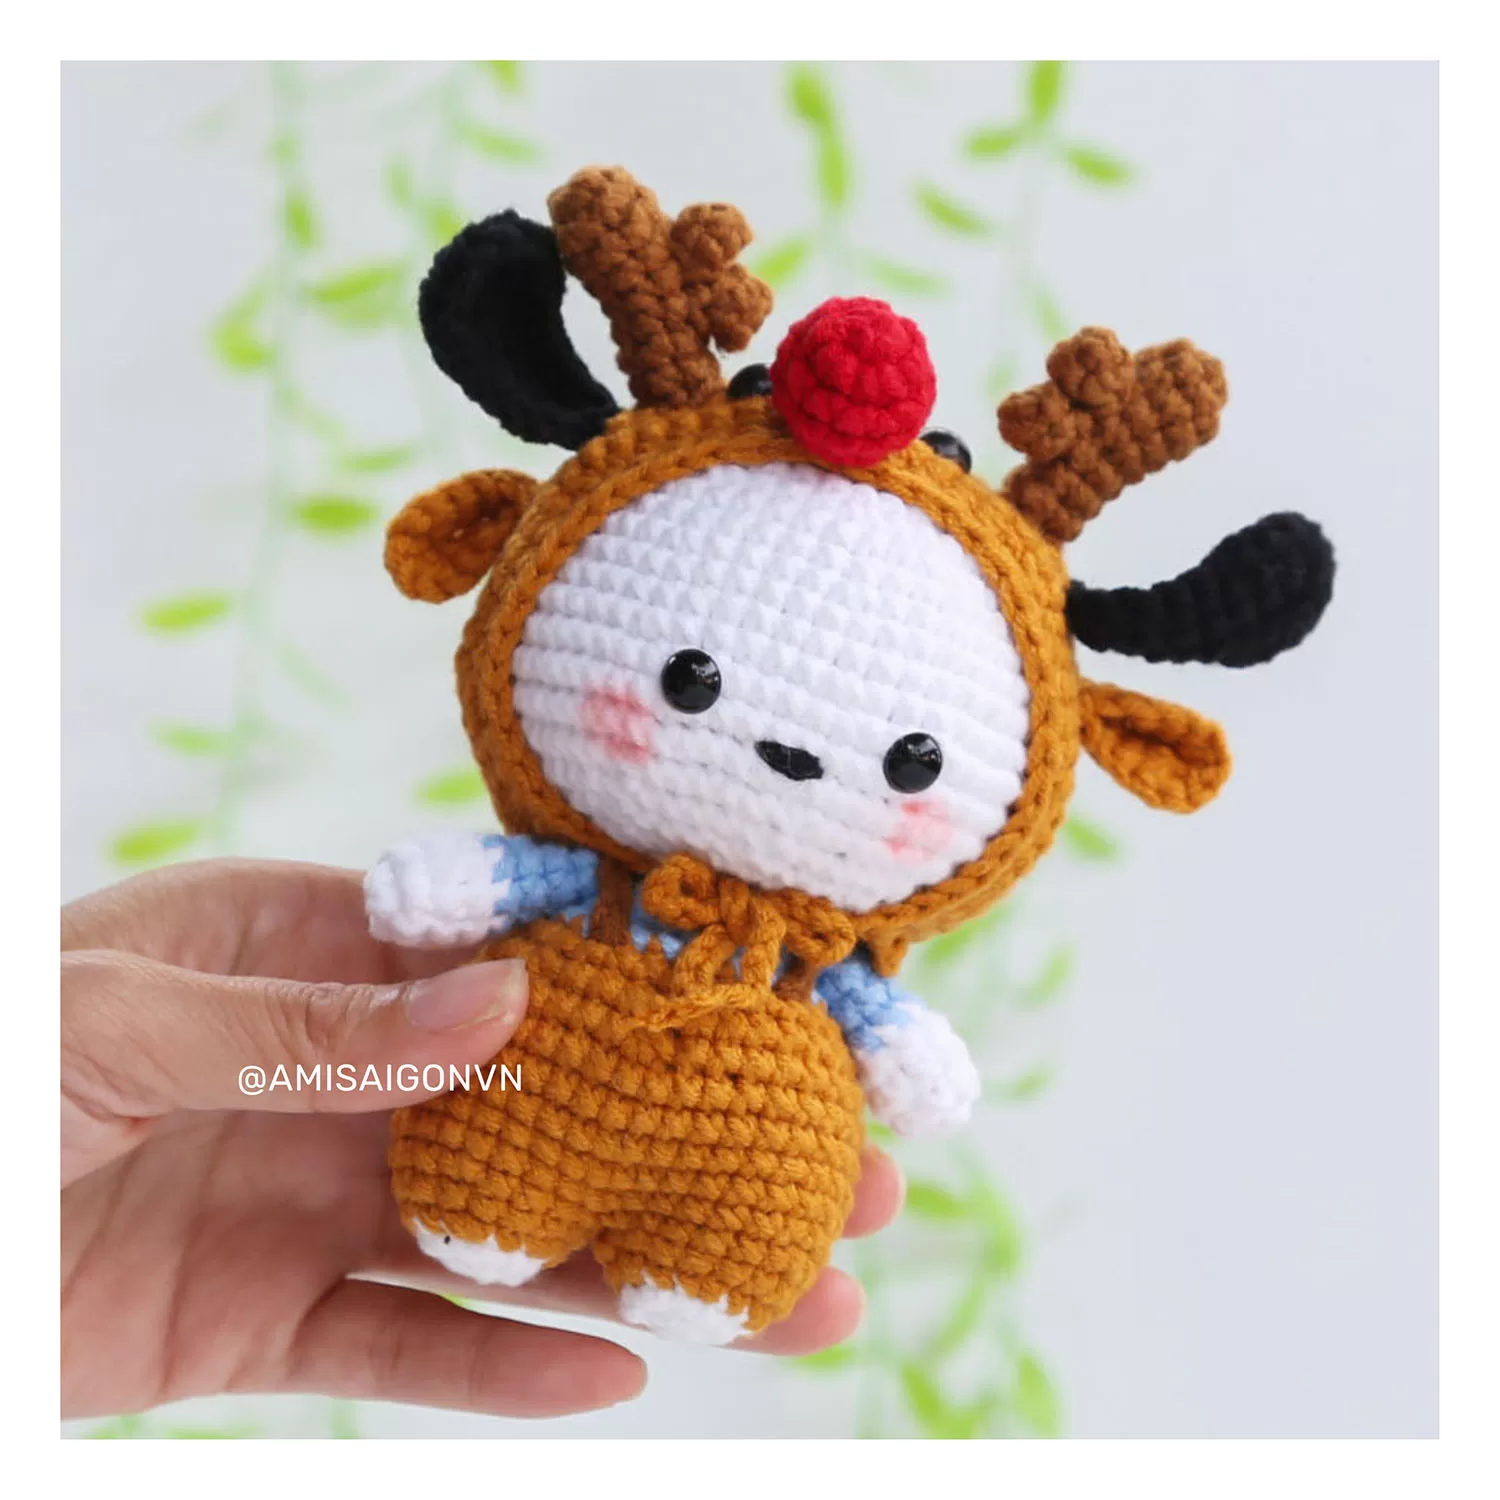 Pochacco in Reindeer Outfit Amigurumi | Crochet Pattern | Amigurumi Tutorial PDF in English | AmiSaigon